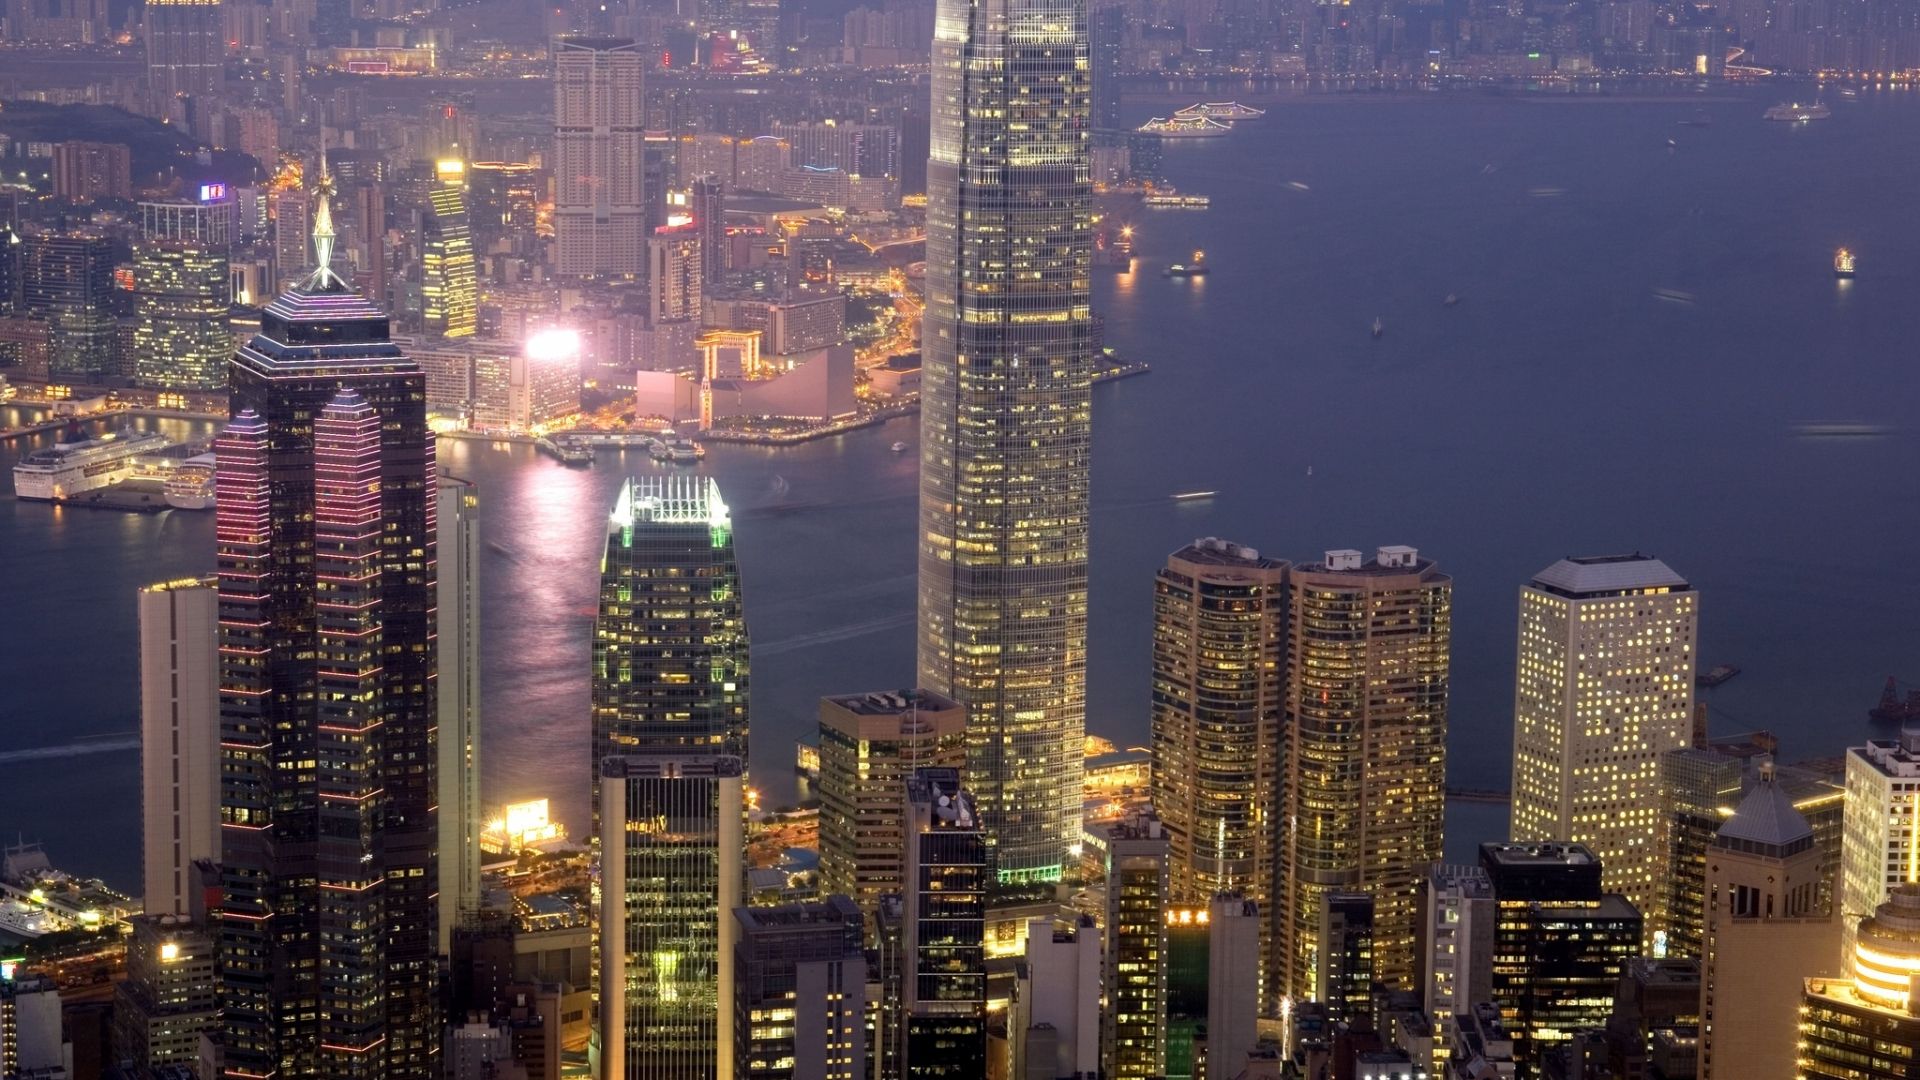 Free download Hong Kong City lights 4K Ultra HD wallpaper 4k